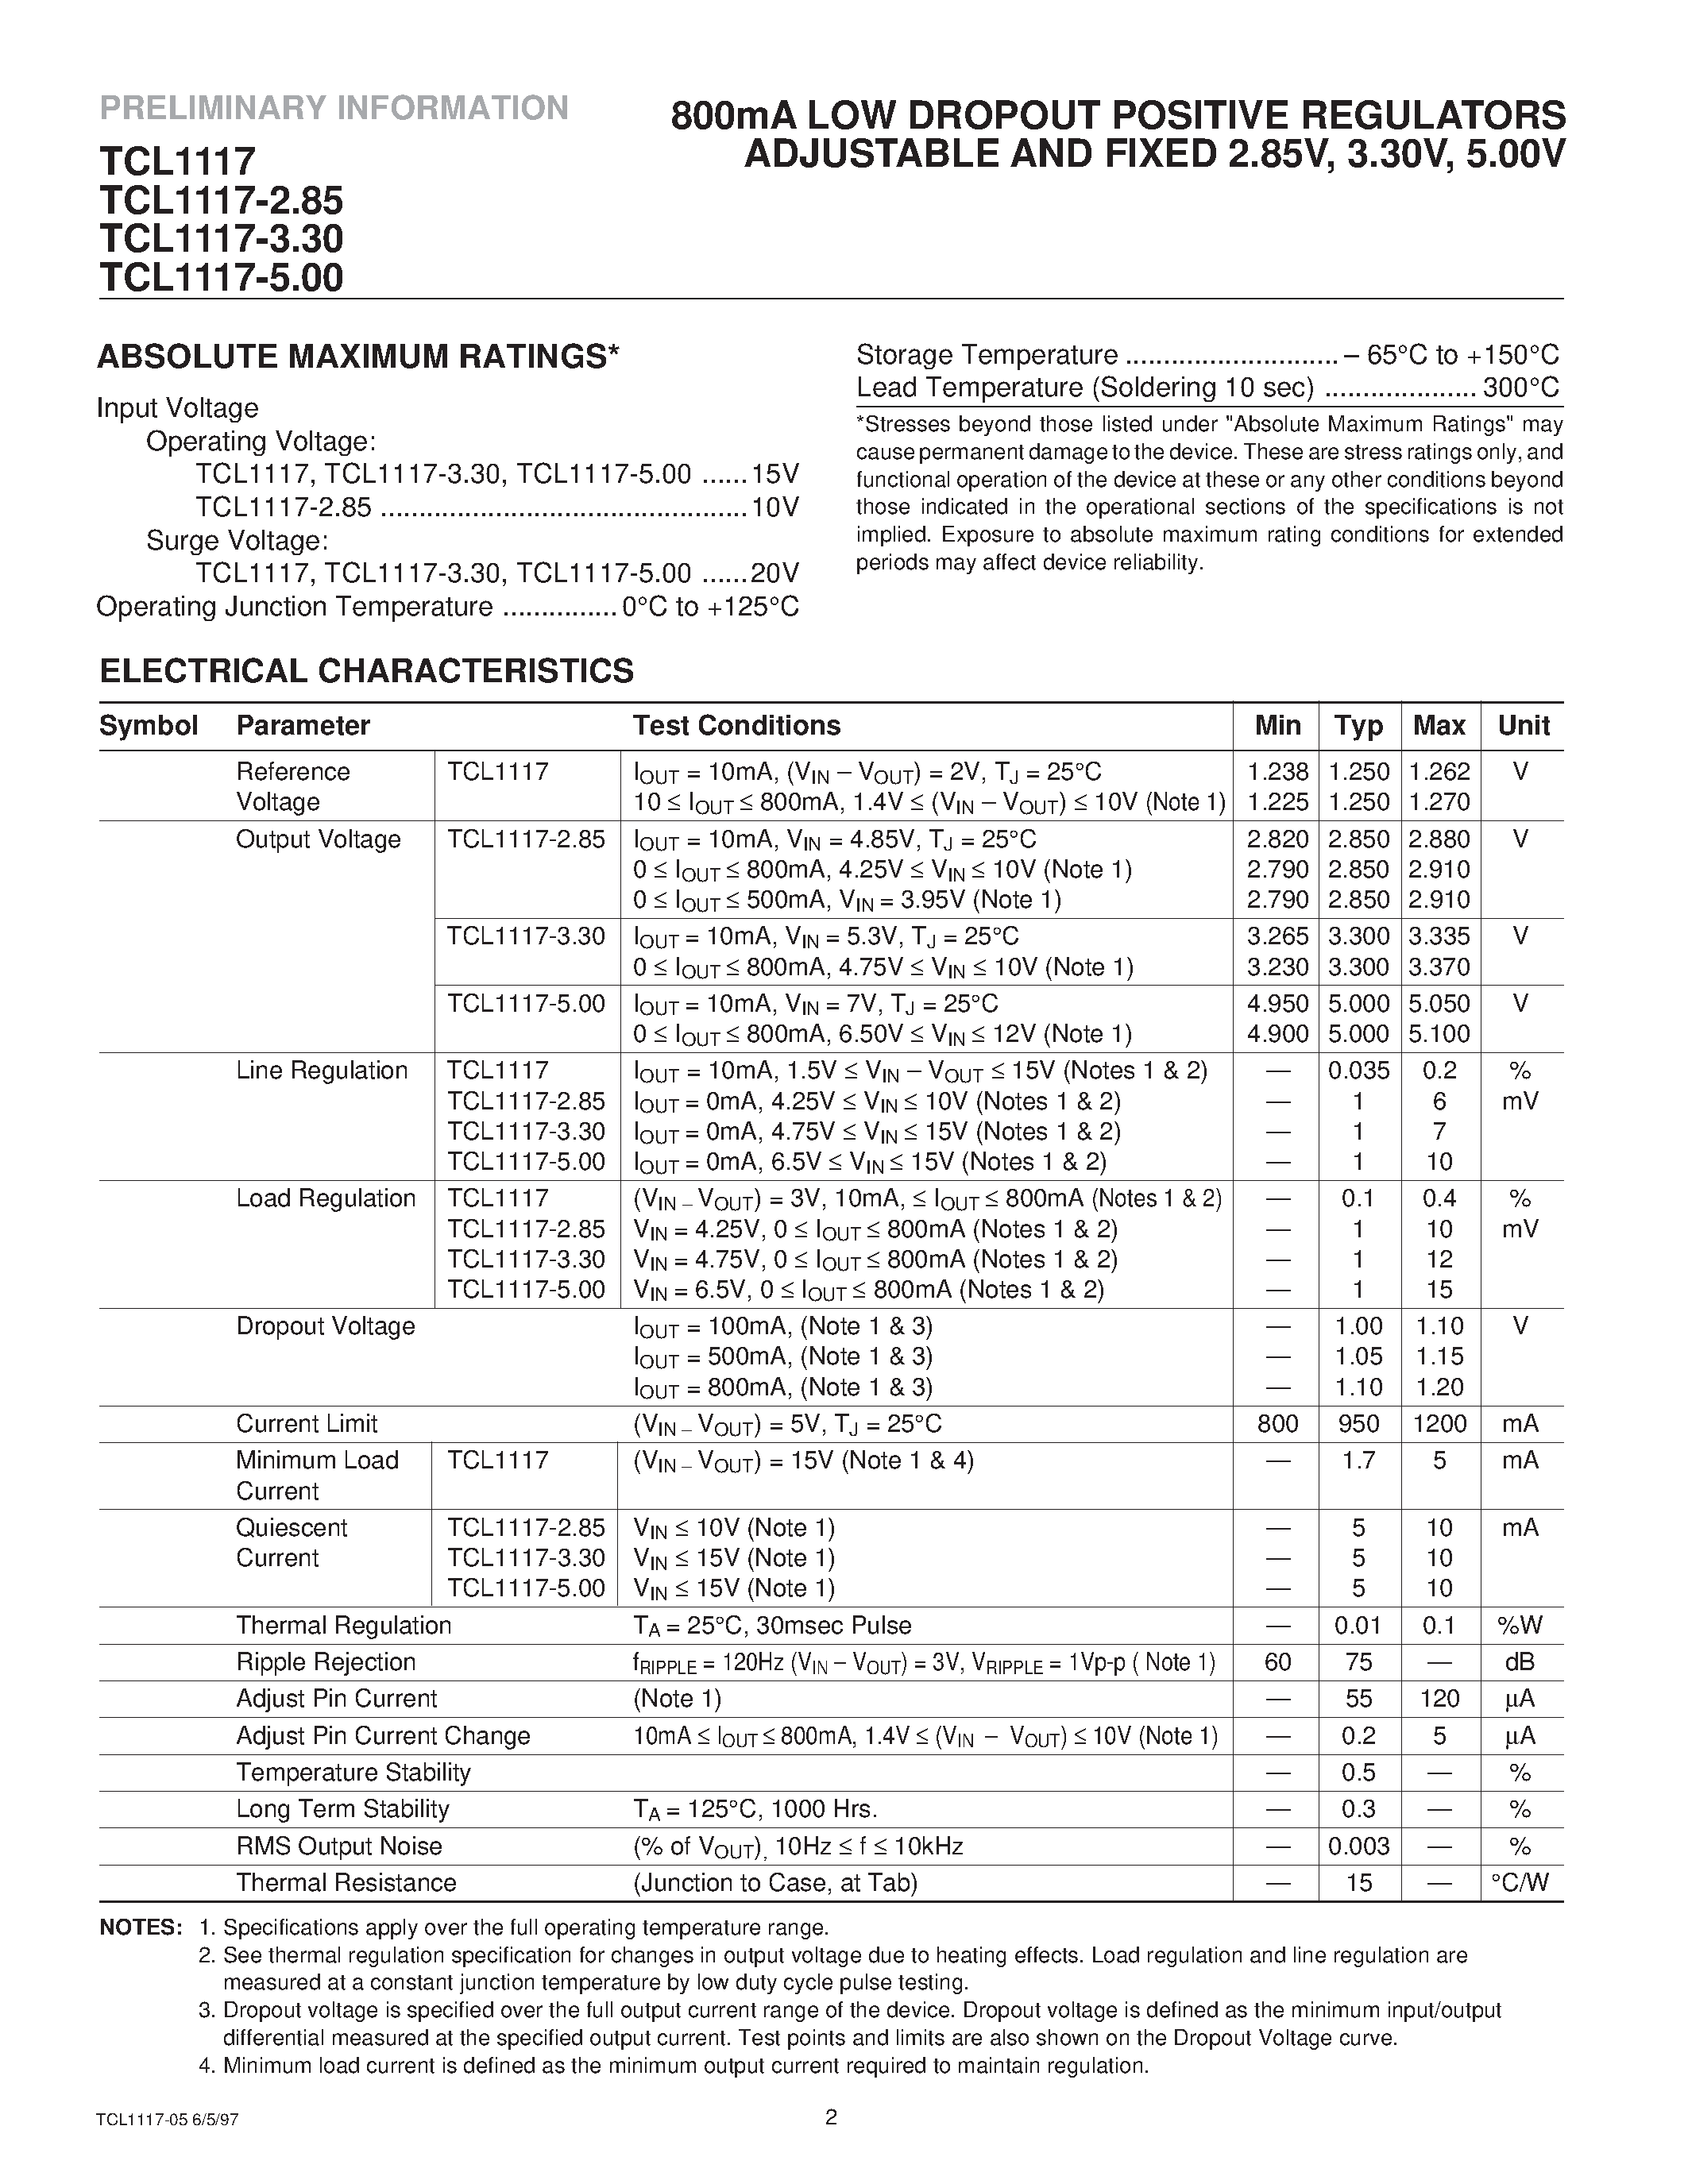 Datasheet TCL1117-5.00CEB - 800mA LOW DROPOUT POSITIVE REGULATORS ADJUSTABLE AND FIXED 2.85V/ 3.30V/ 5.00V page 2